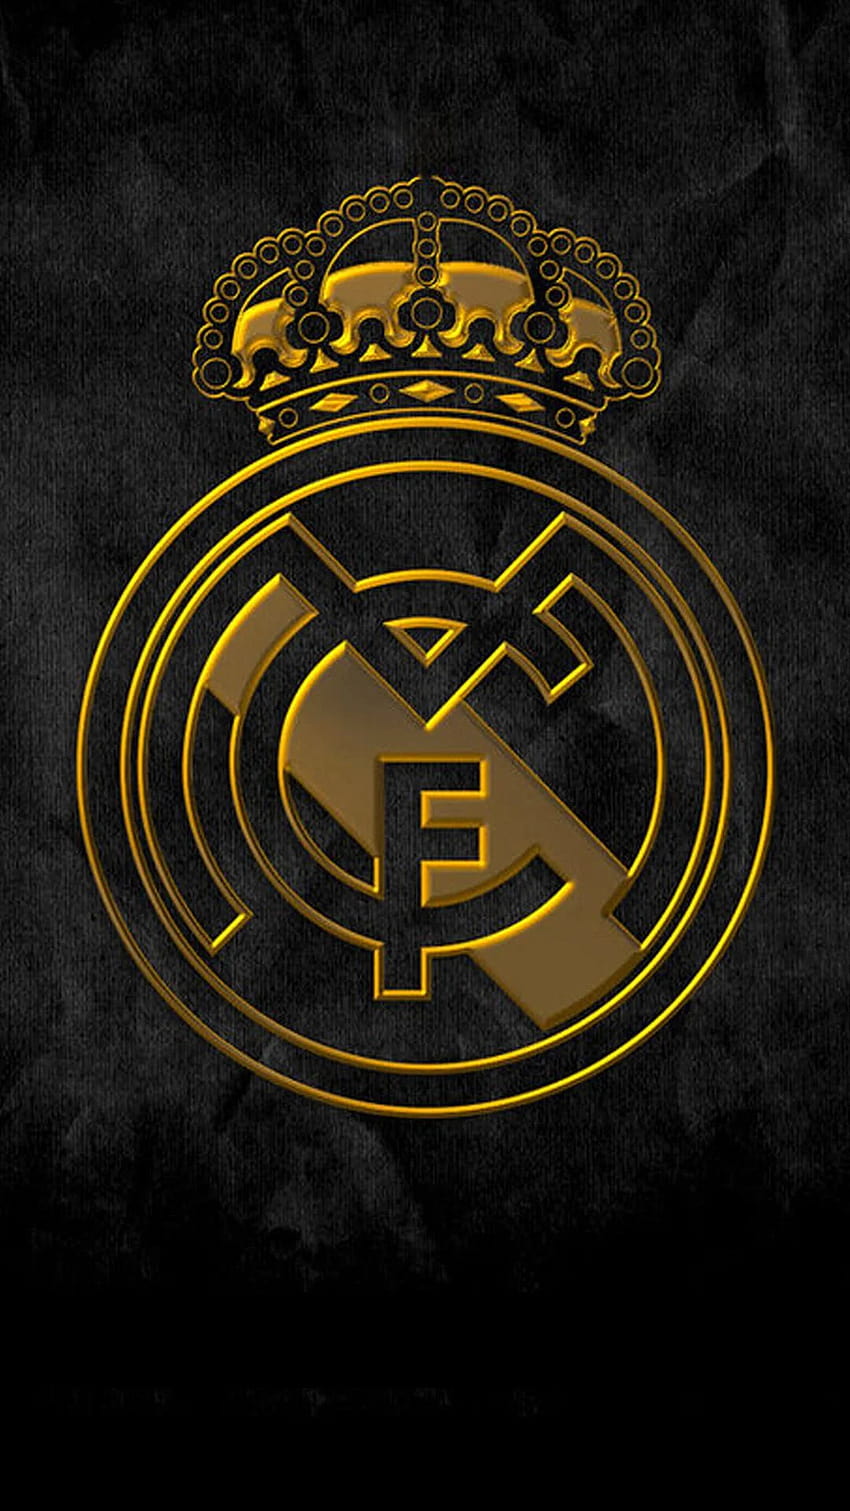 8 Real Madrid, real madrid 2020 wallpaper ponsel HD